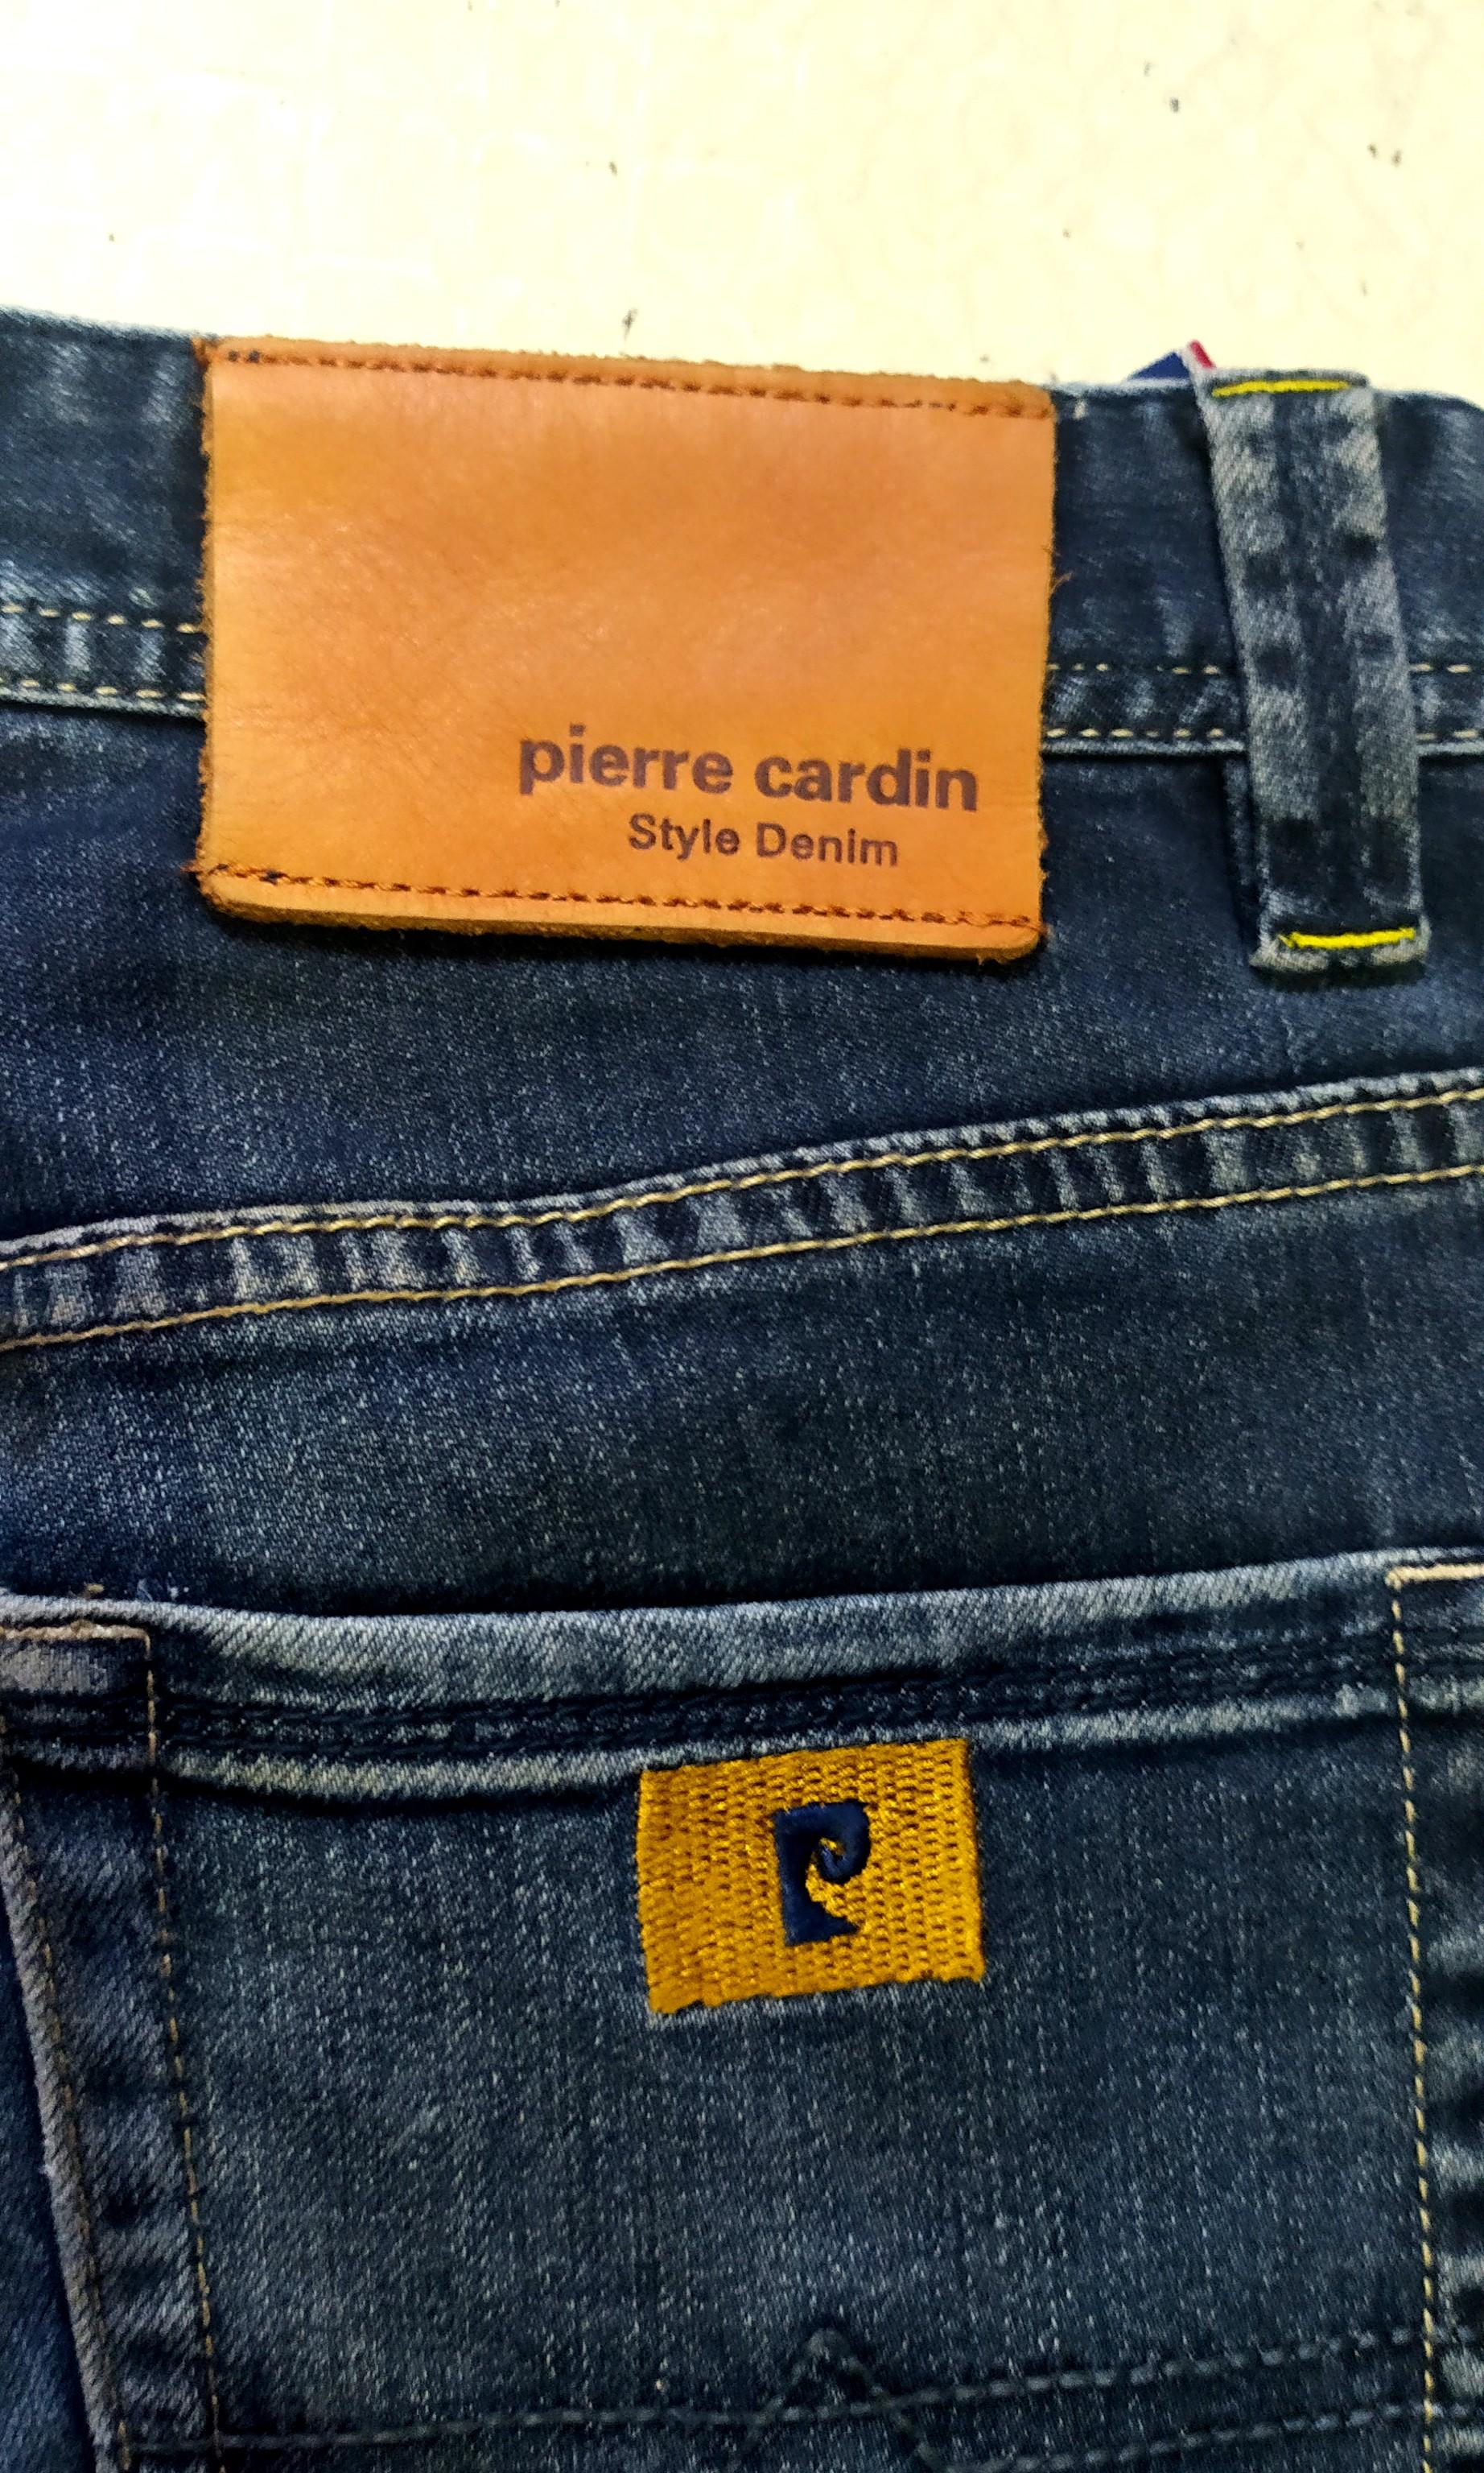 pierre cardin jeans price